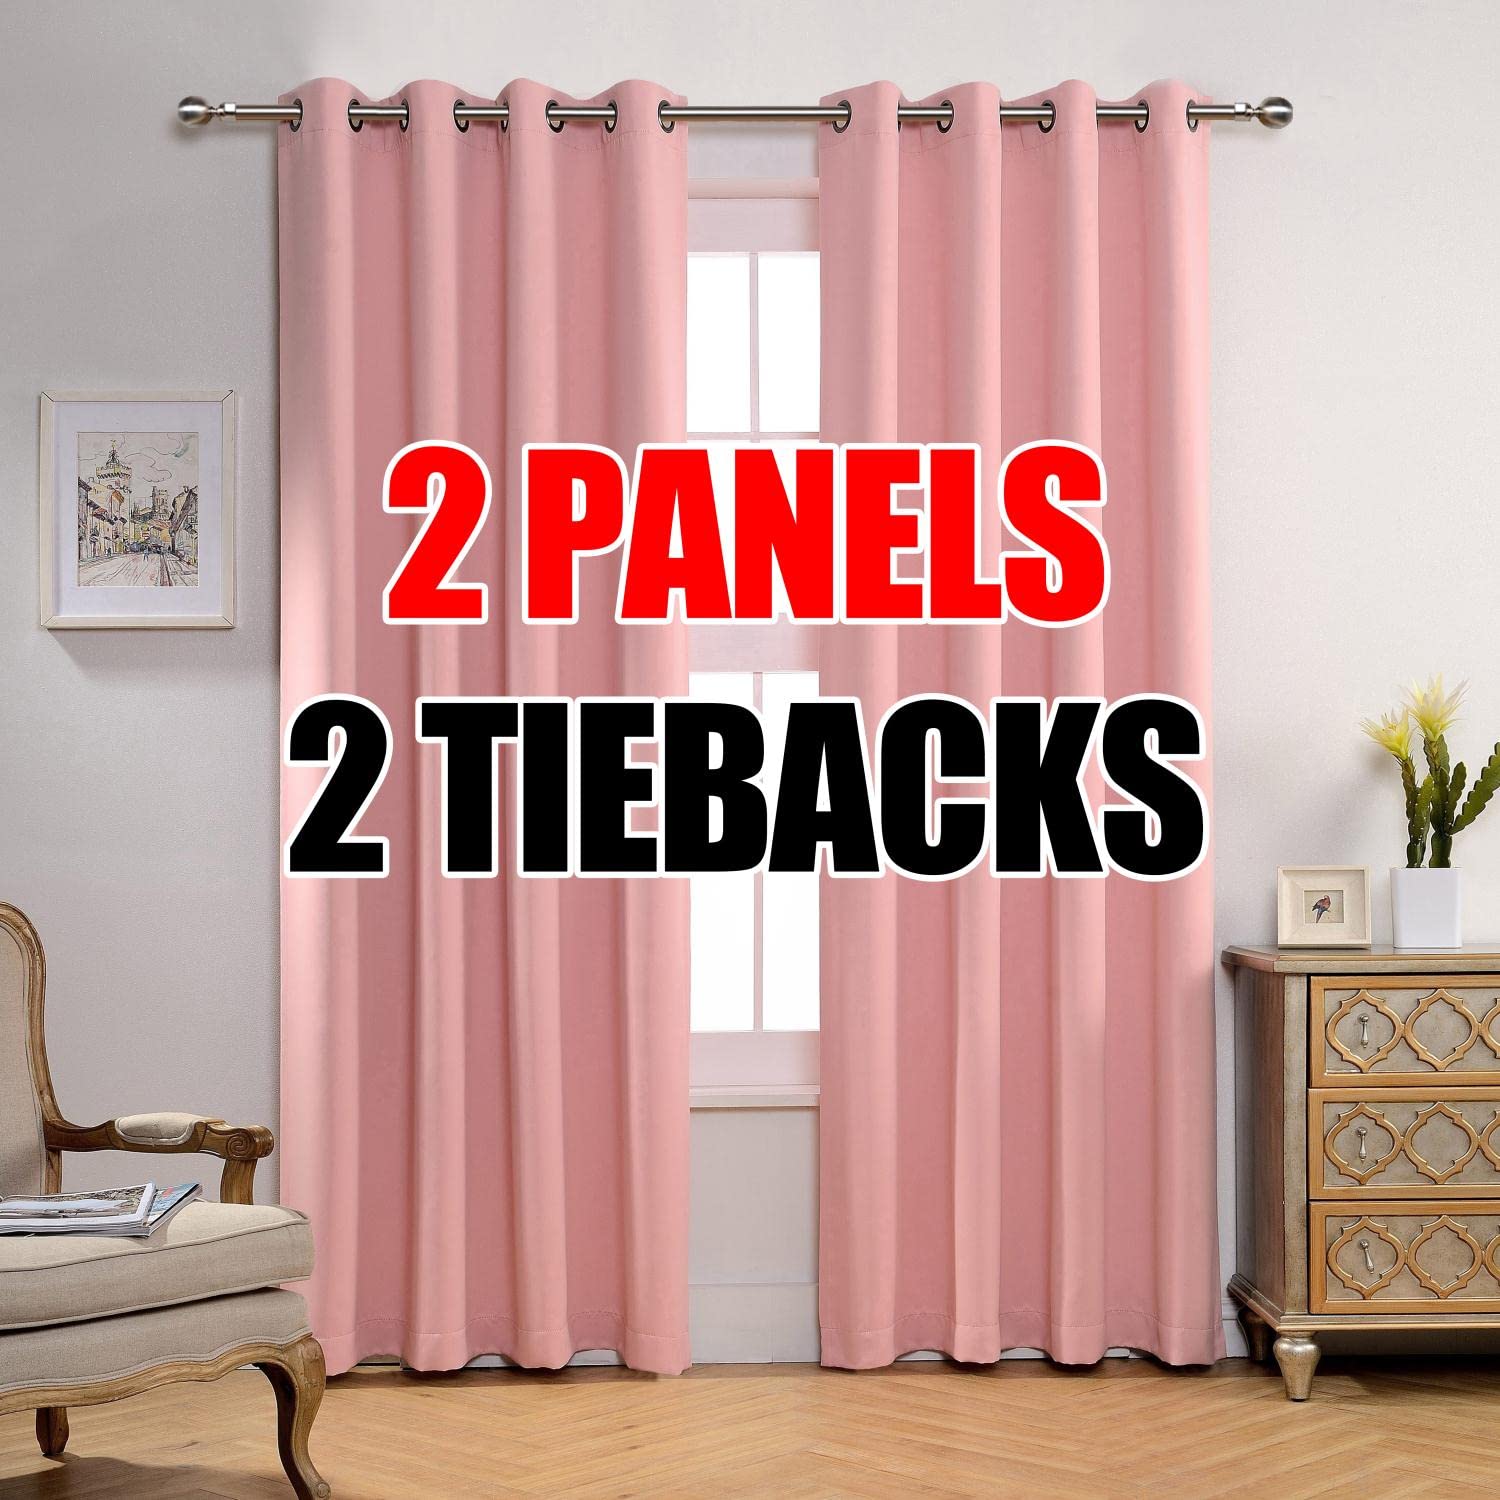 MIUcO Room Darkening Soild grommet Blackout curtains Panels for Nursery Window curtains Set of 2 52x95 Inch Pink, Bonus 2 Tie Ba